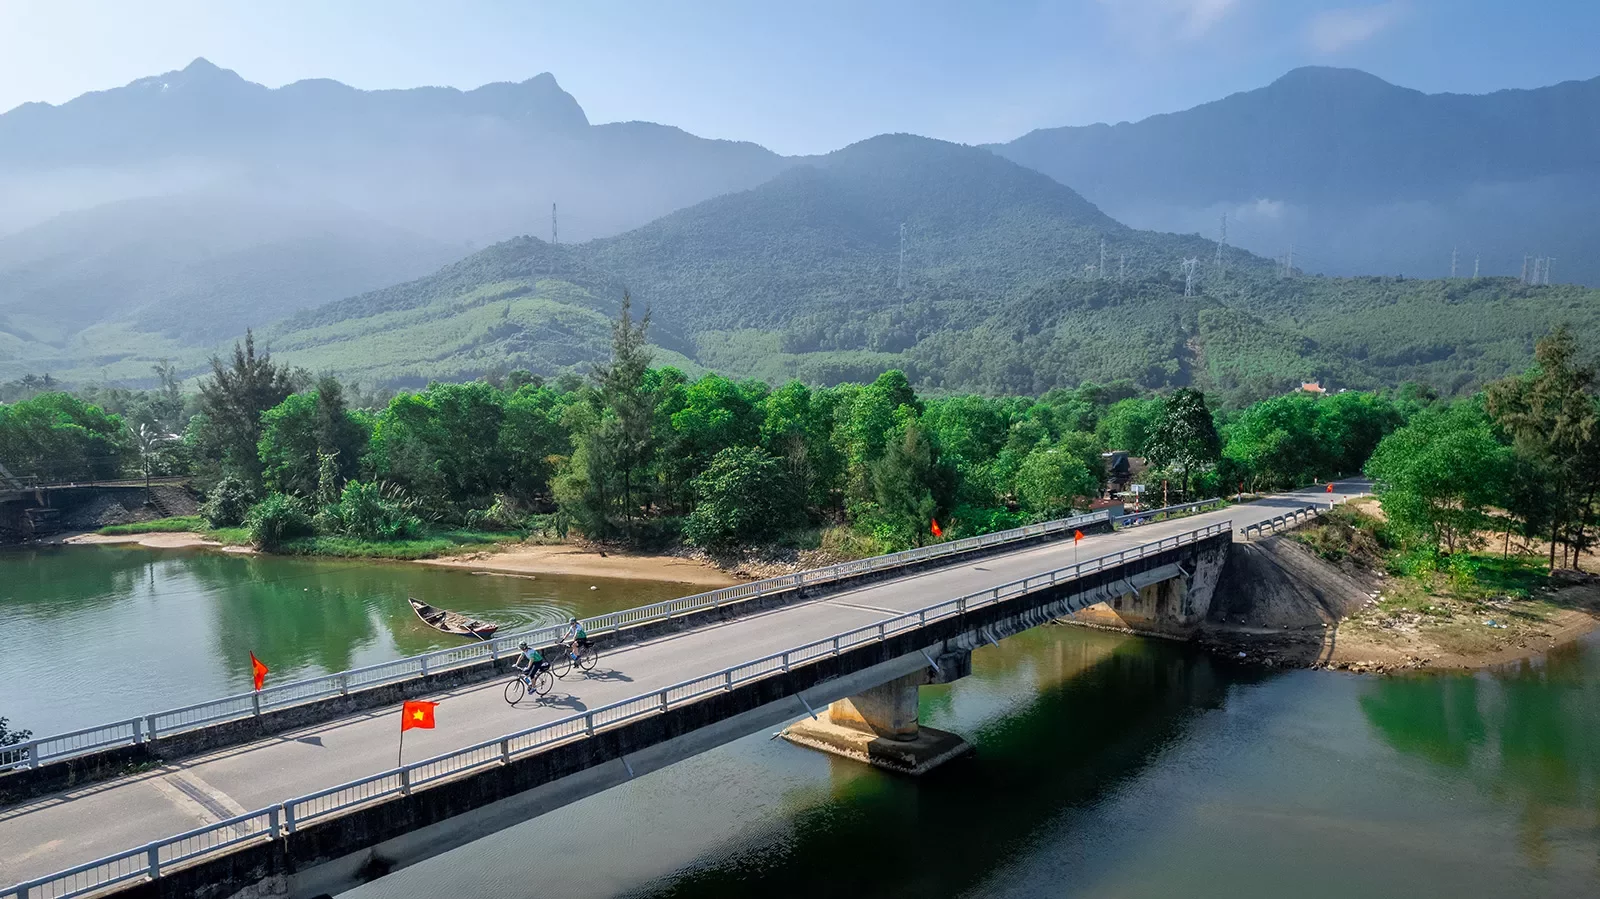 Bike riders cross a large bridge